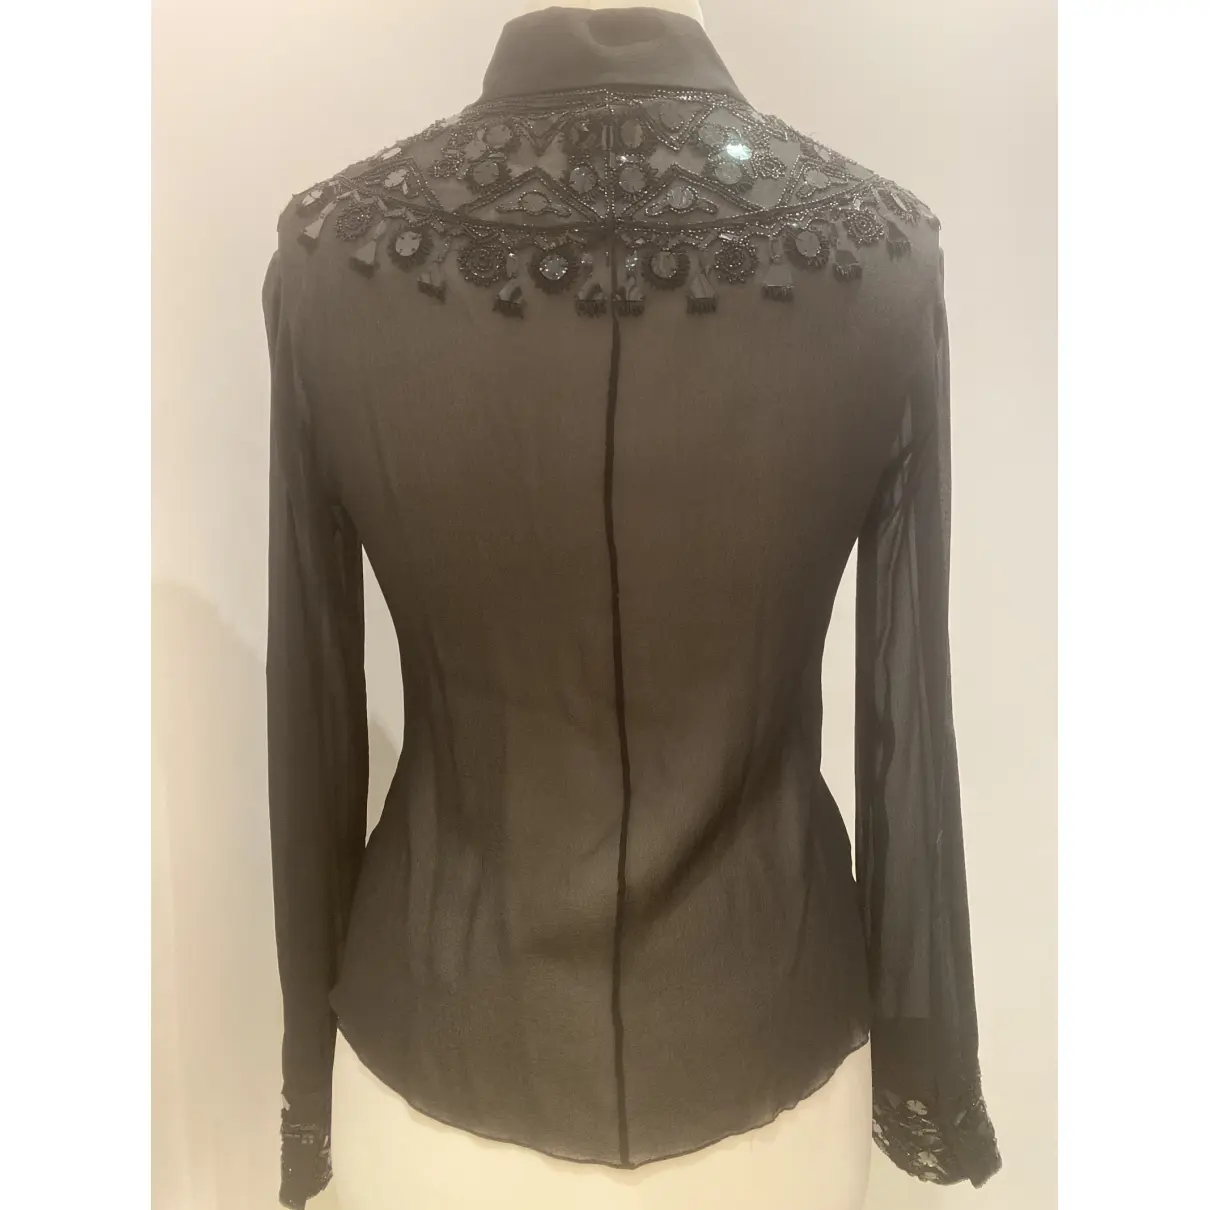 Buy Roberto Cavalli Silk blouse online